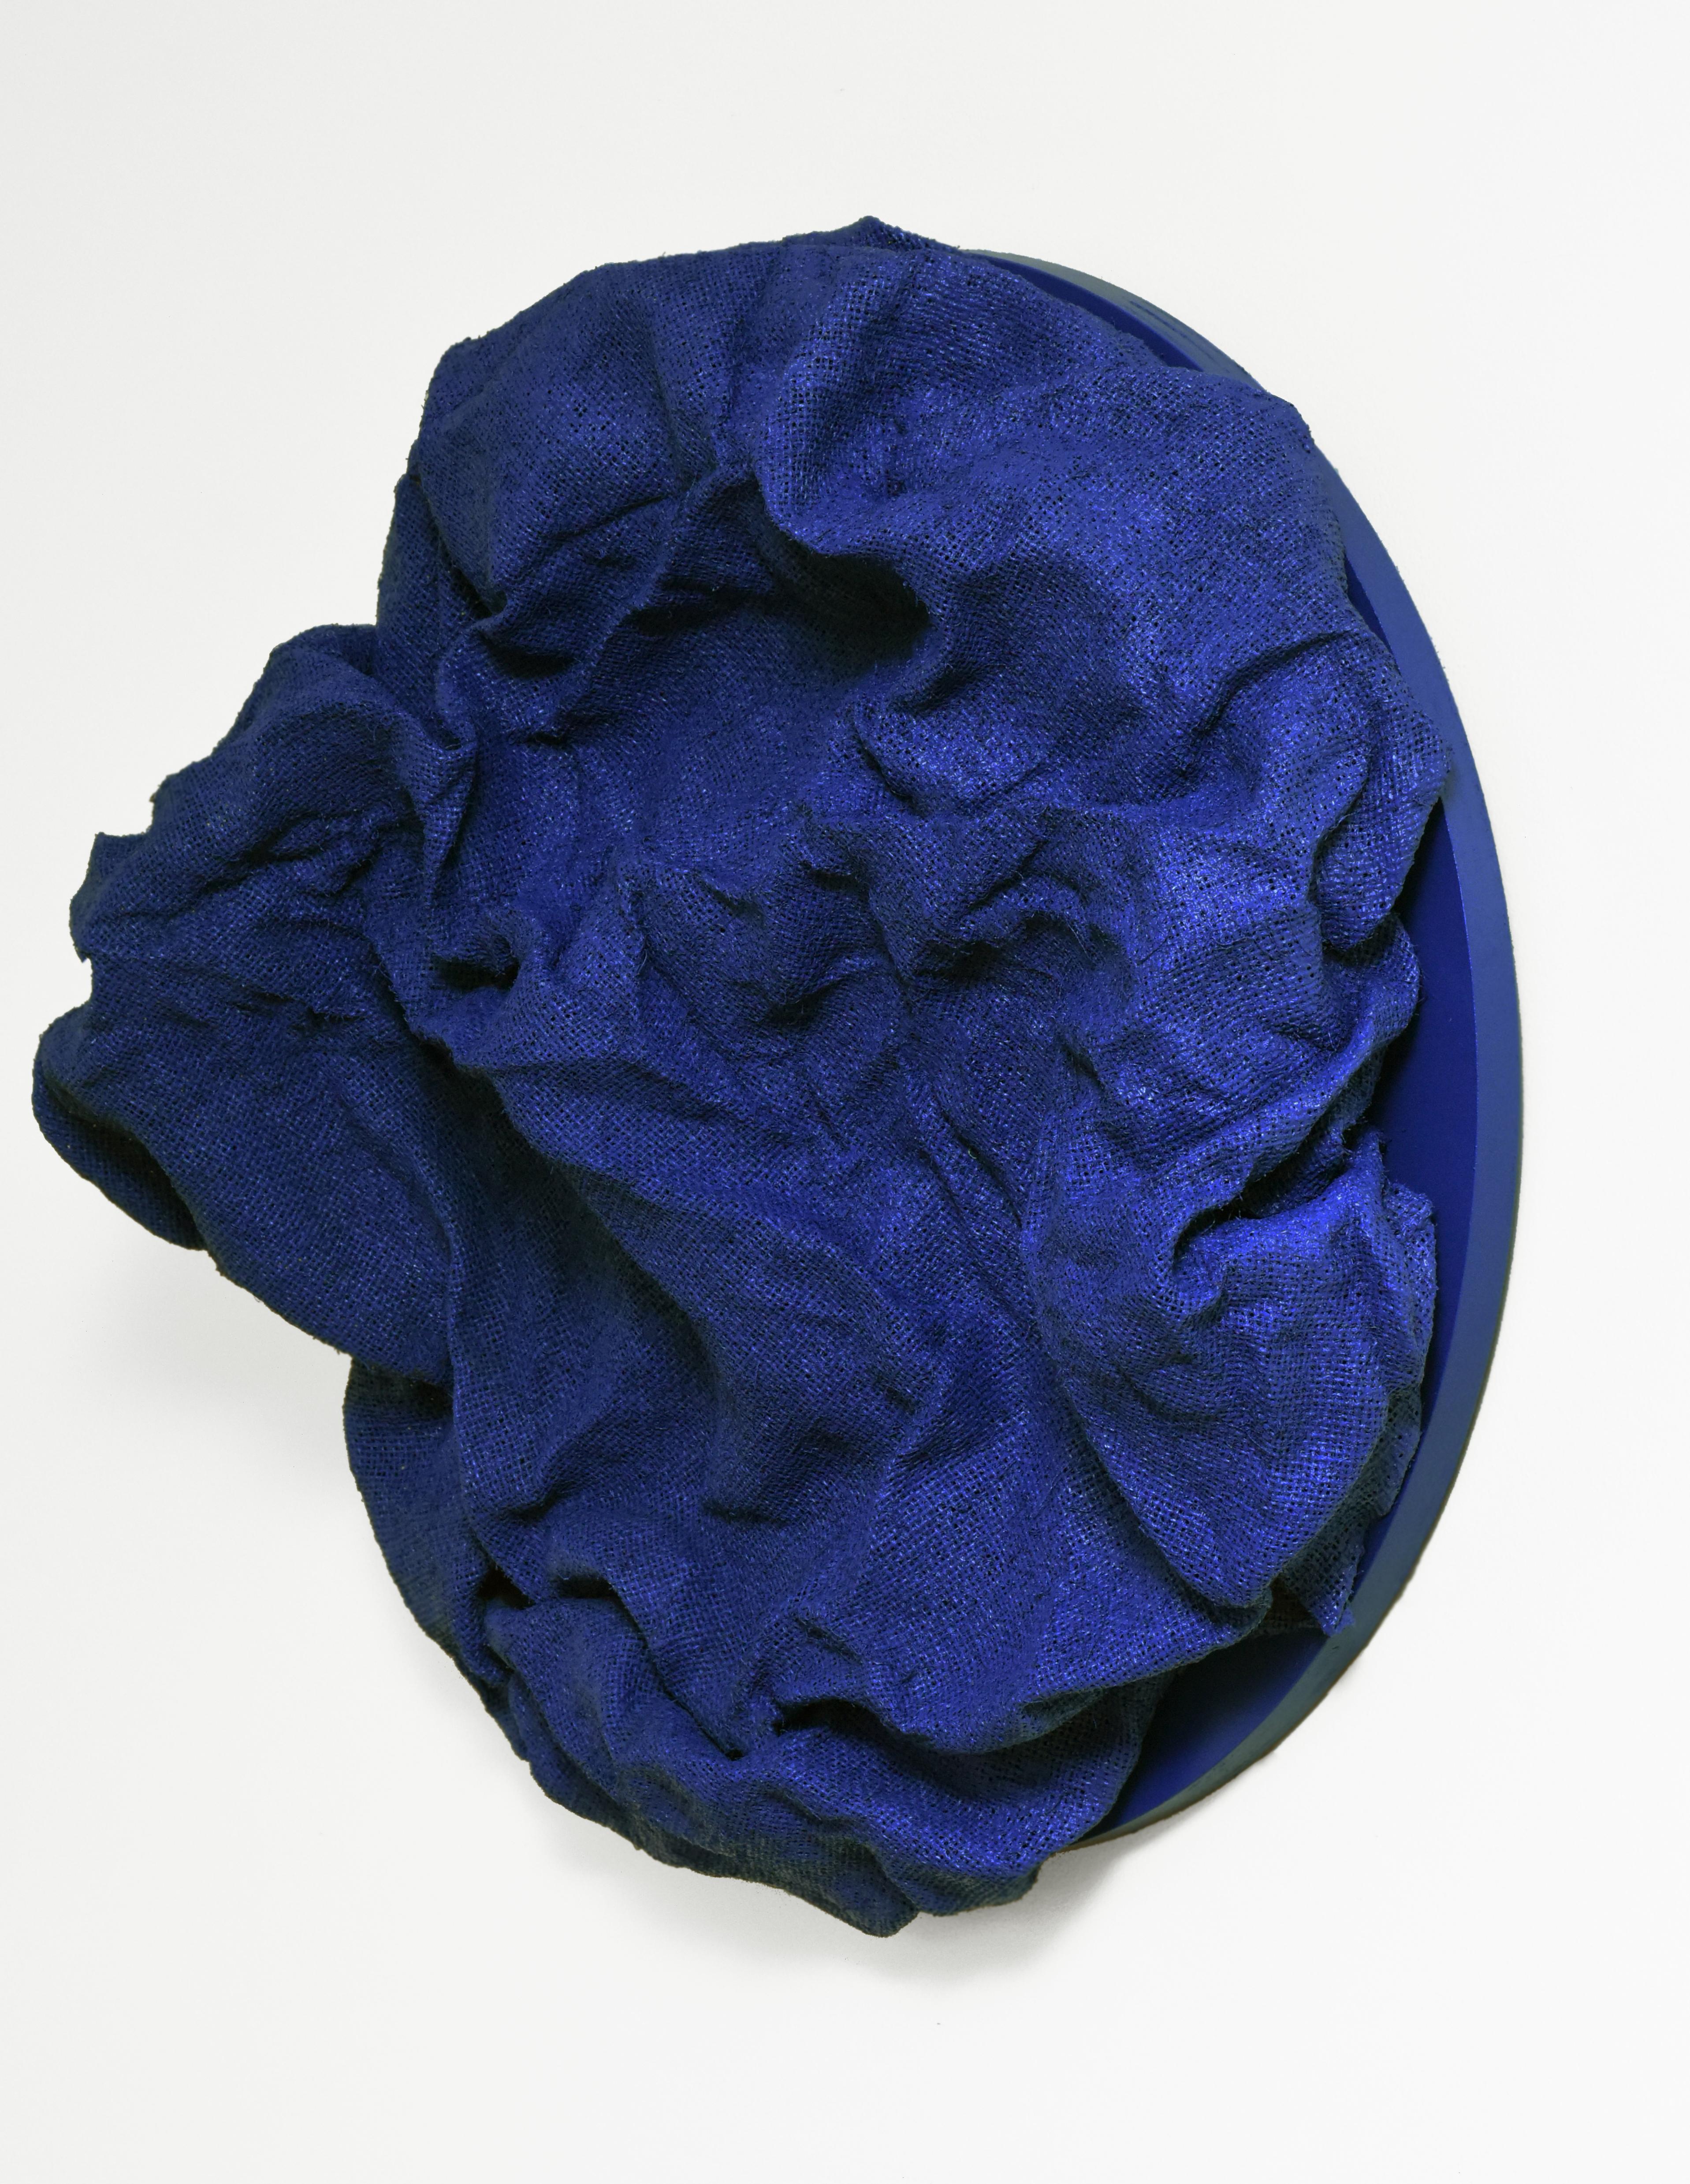 Iris Blue Folds (bleu marine, bleu foncé, tissu dur, design contemporain, textile - Sculpture de Chloe Hedden